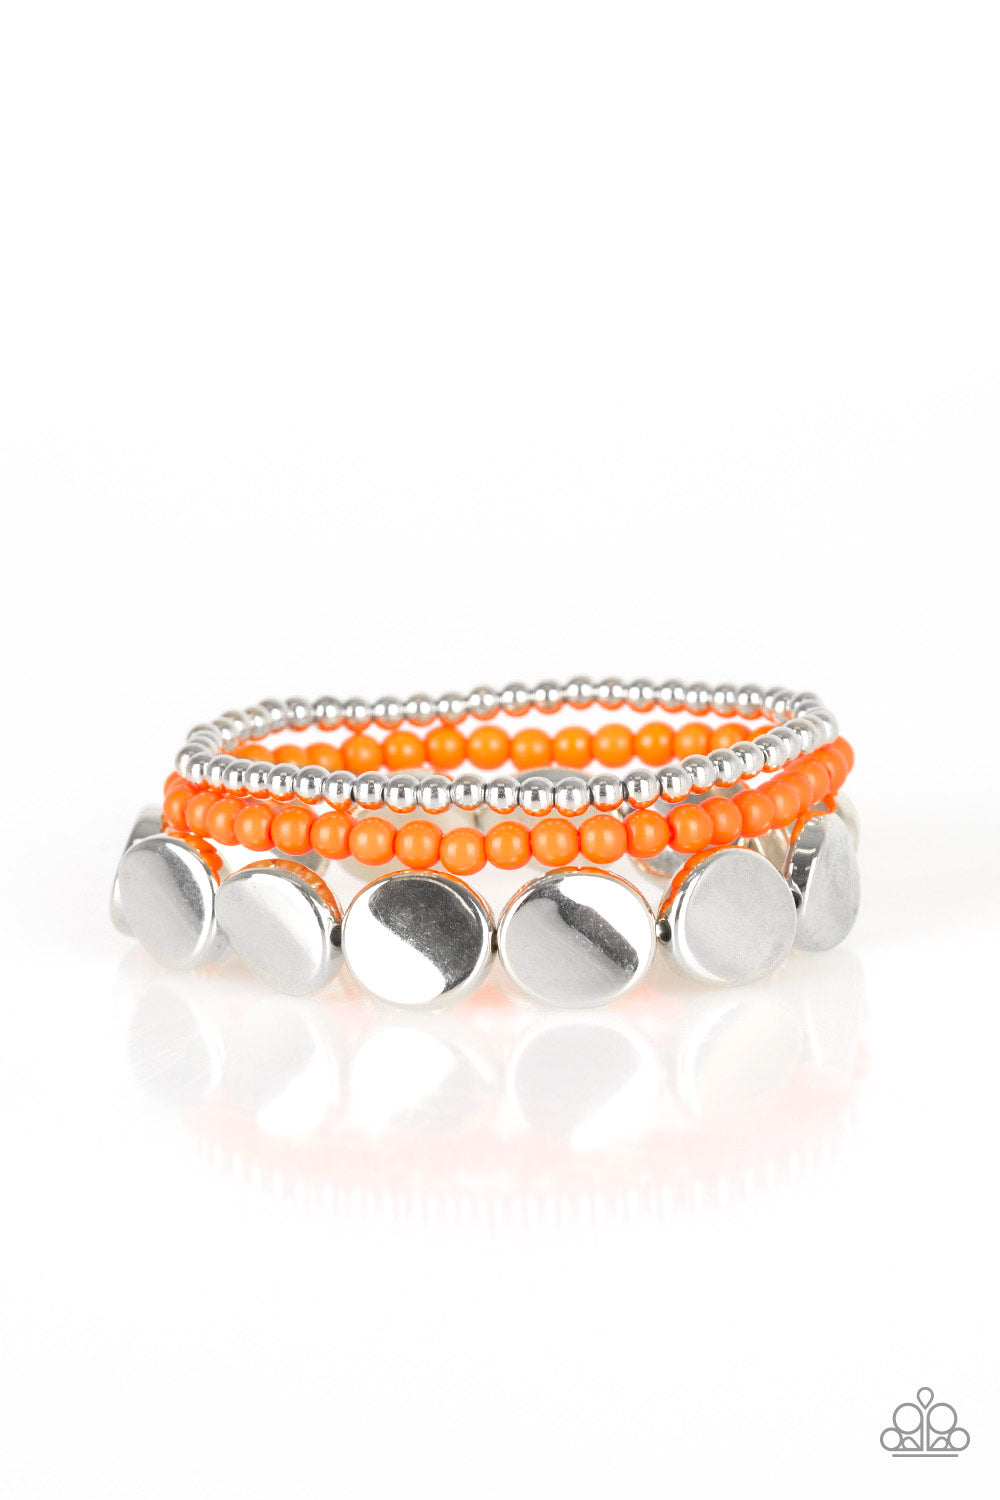 Beyond The Basics - Orange bracelet